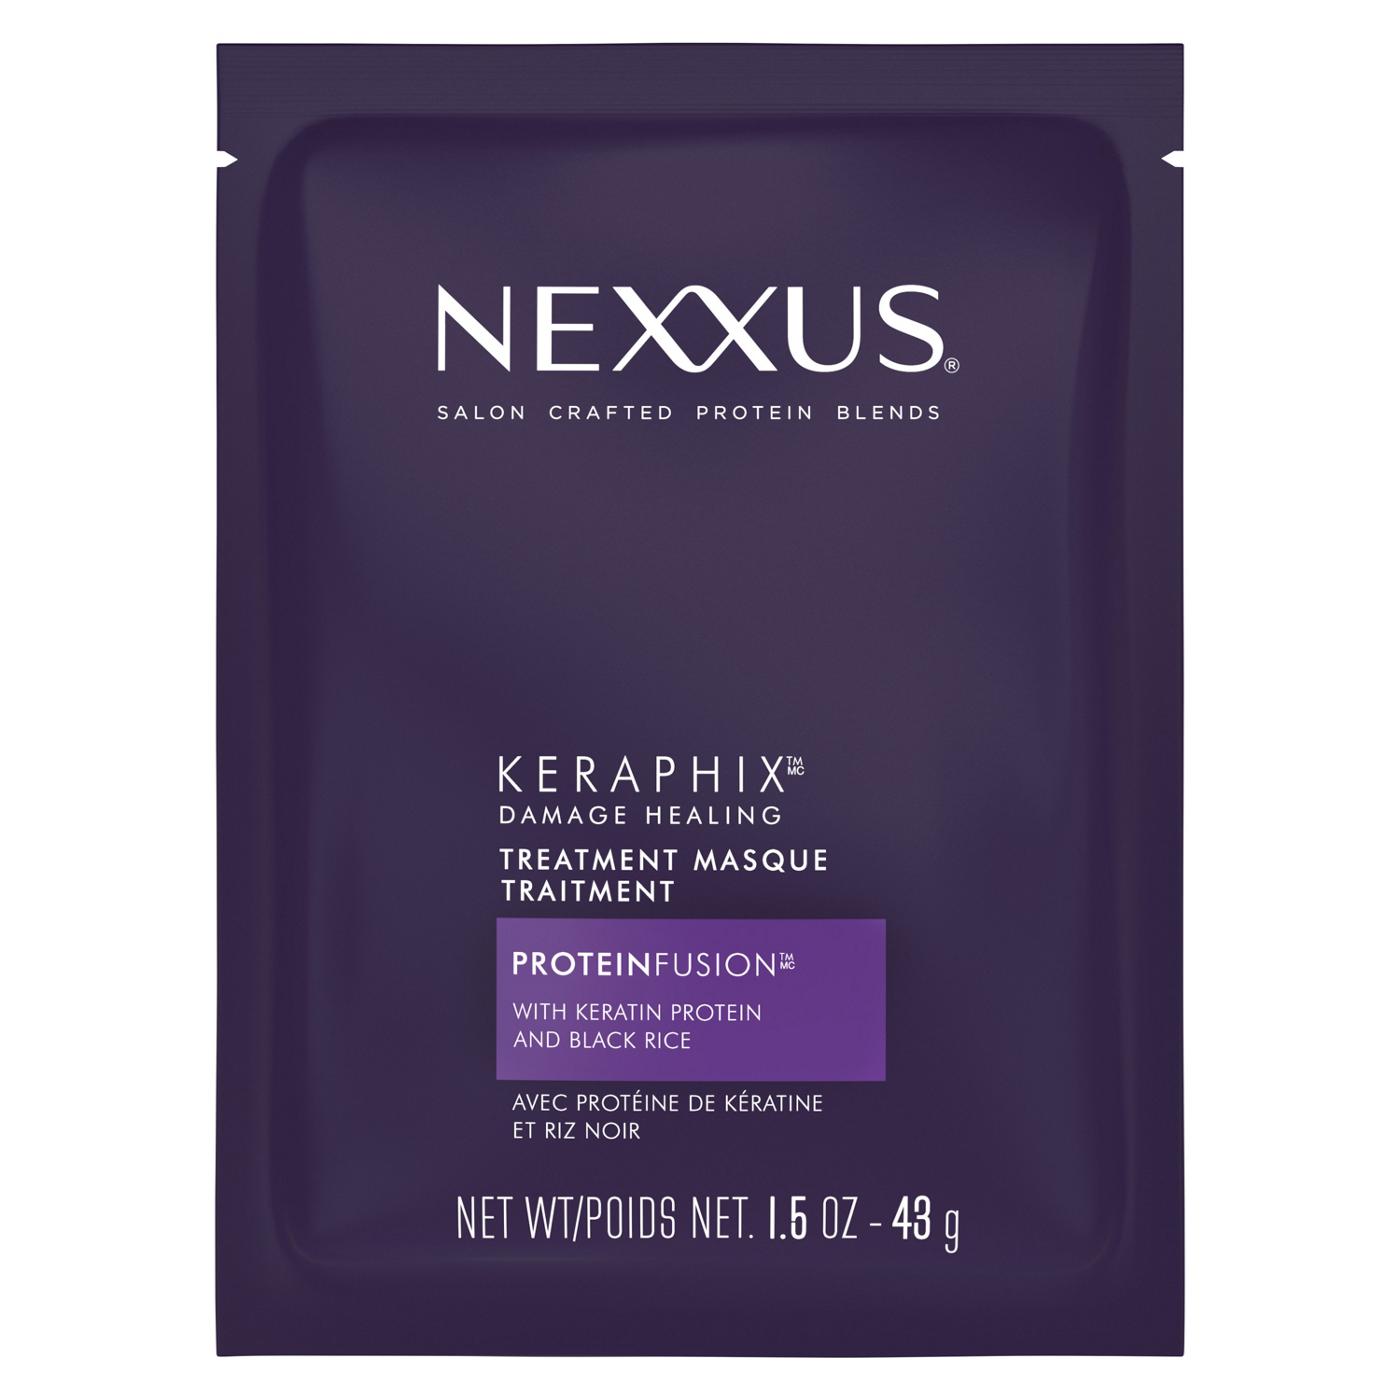 Nexxus Keraphix for Damaged Hair Masque; image 1 of 8